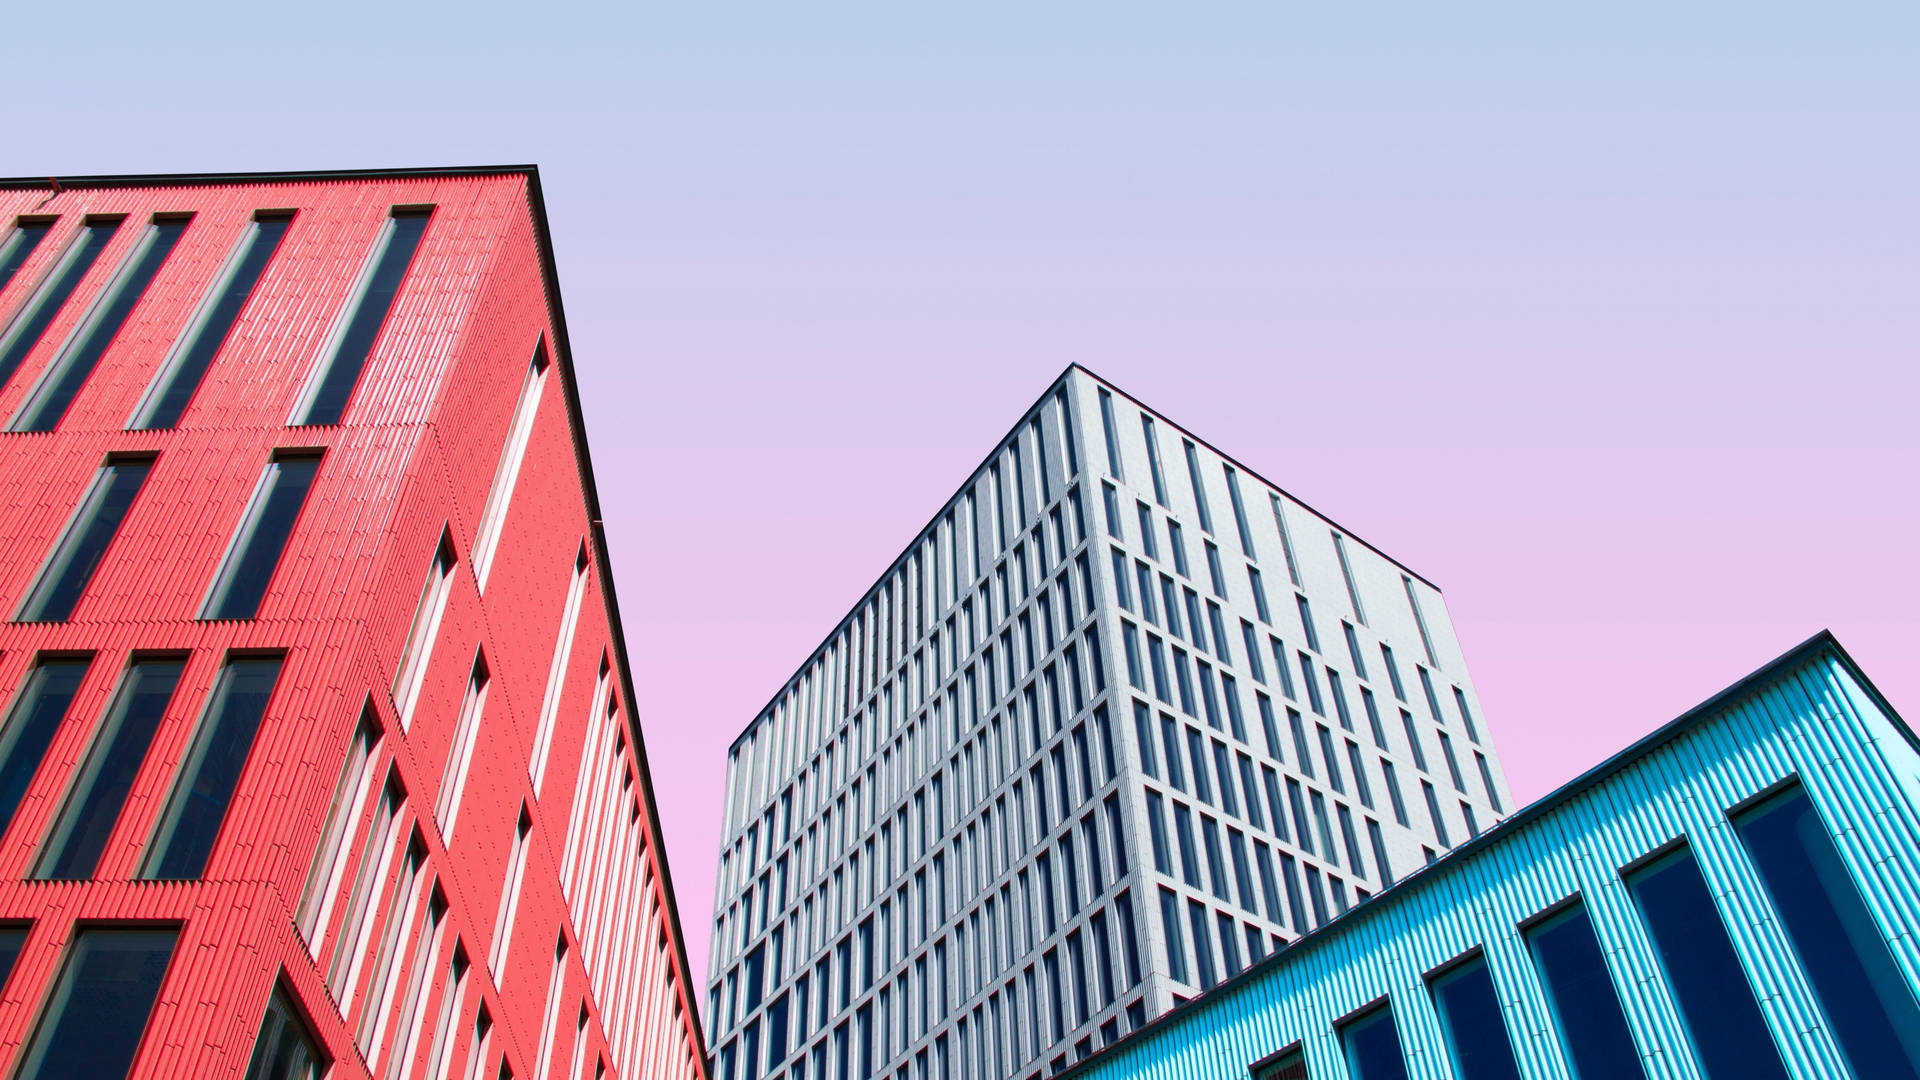 4k Architecture Colorful Buildings Wallpaper